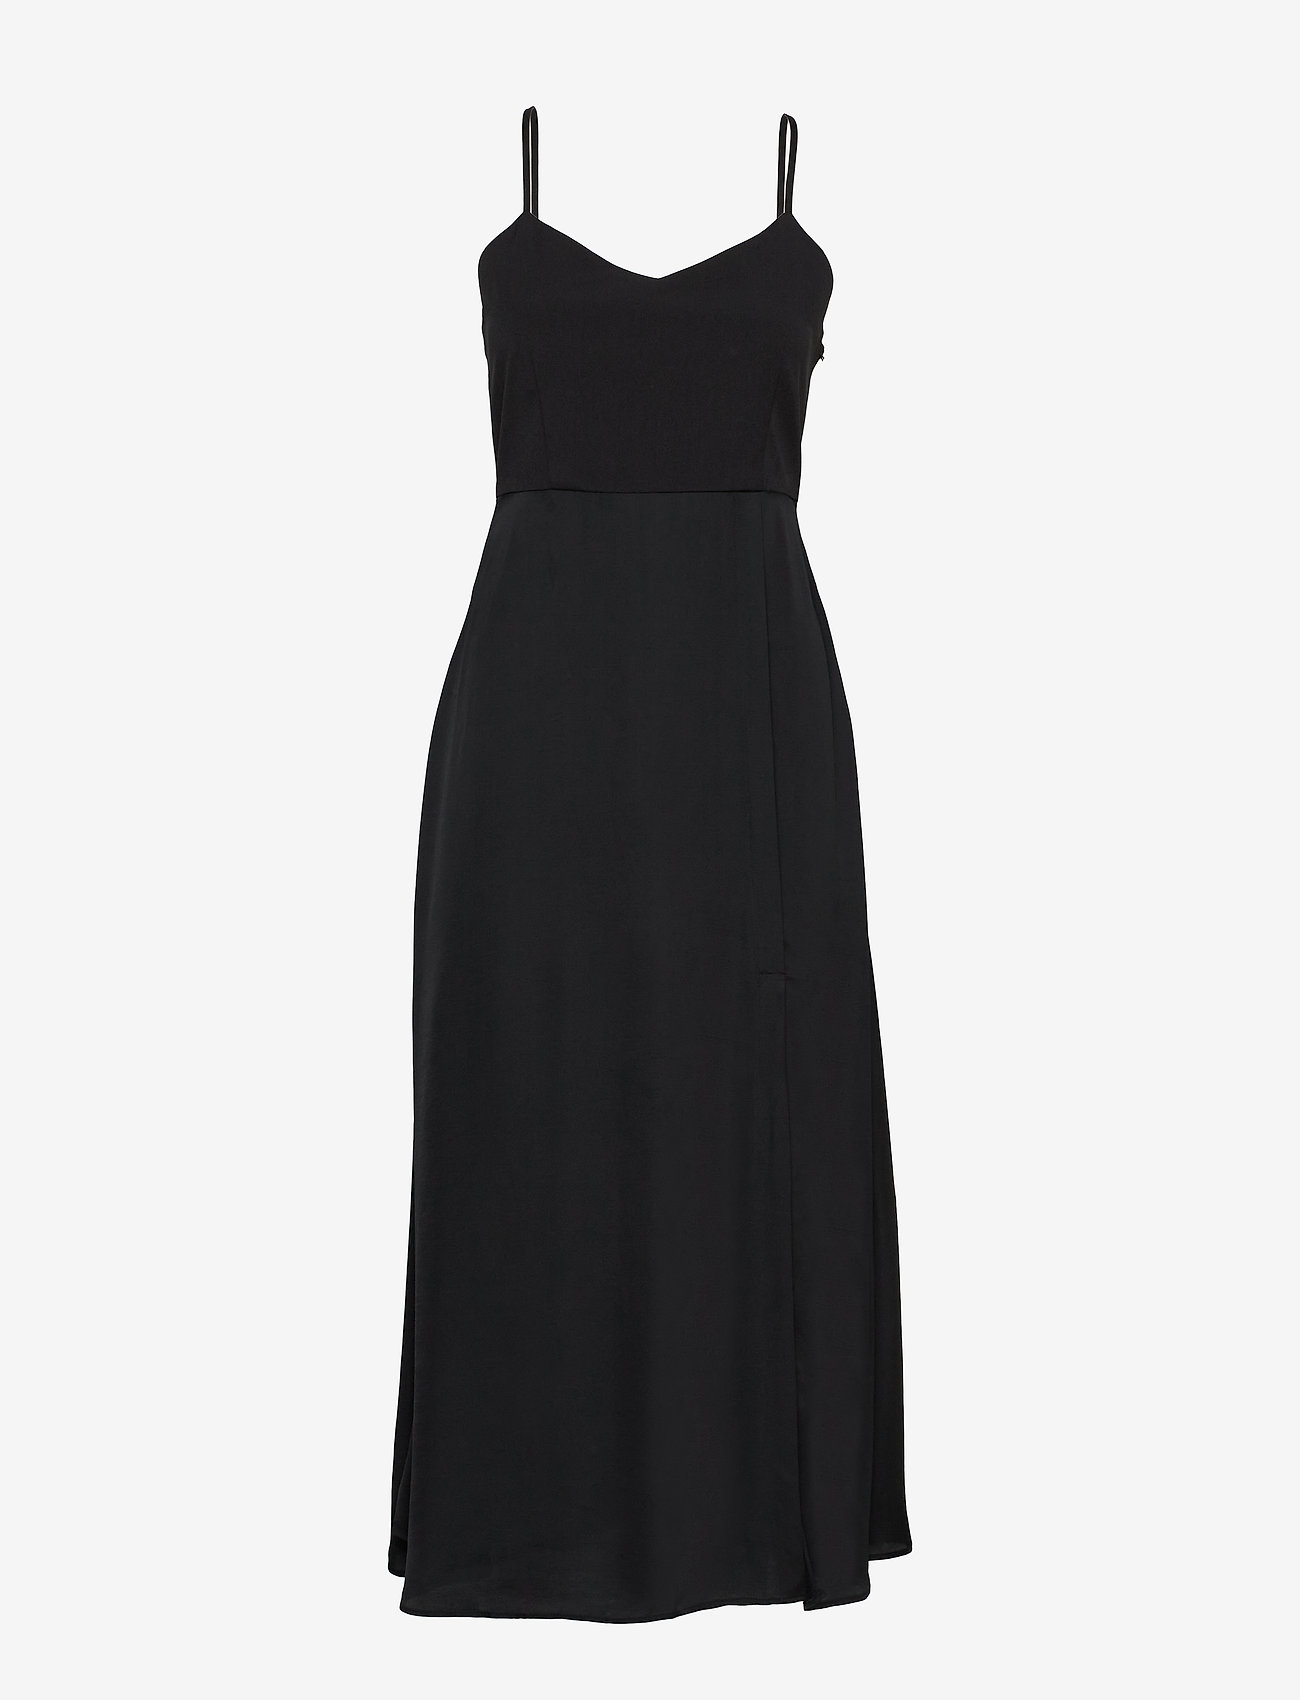 black maxi slip dress